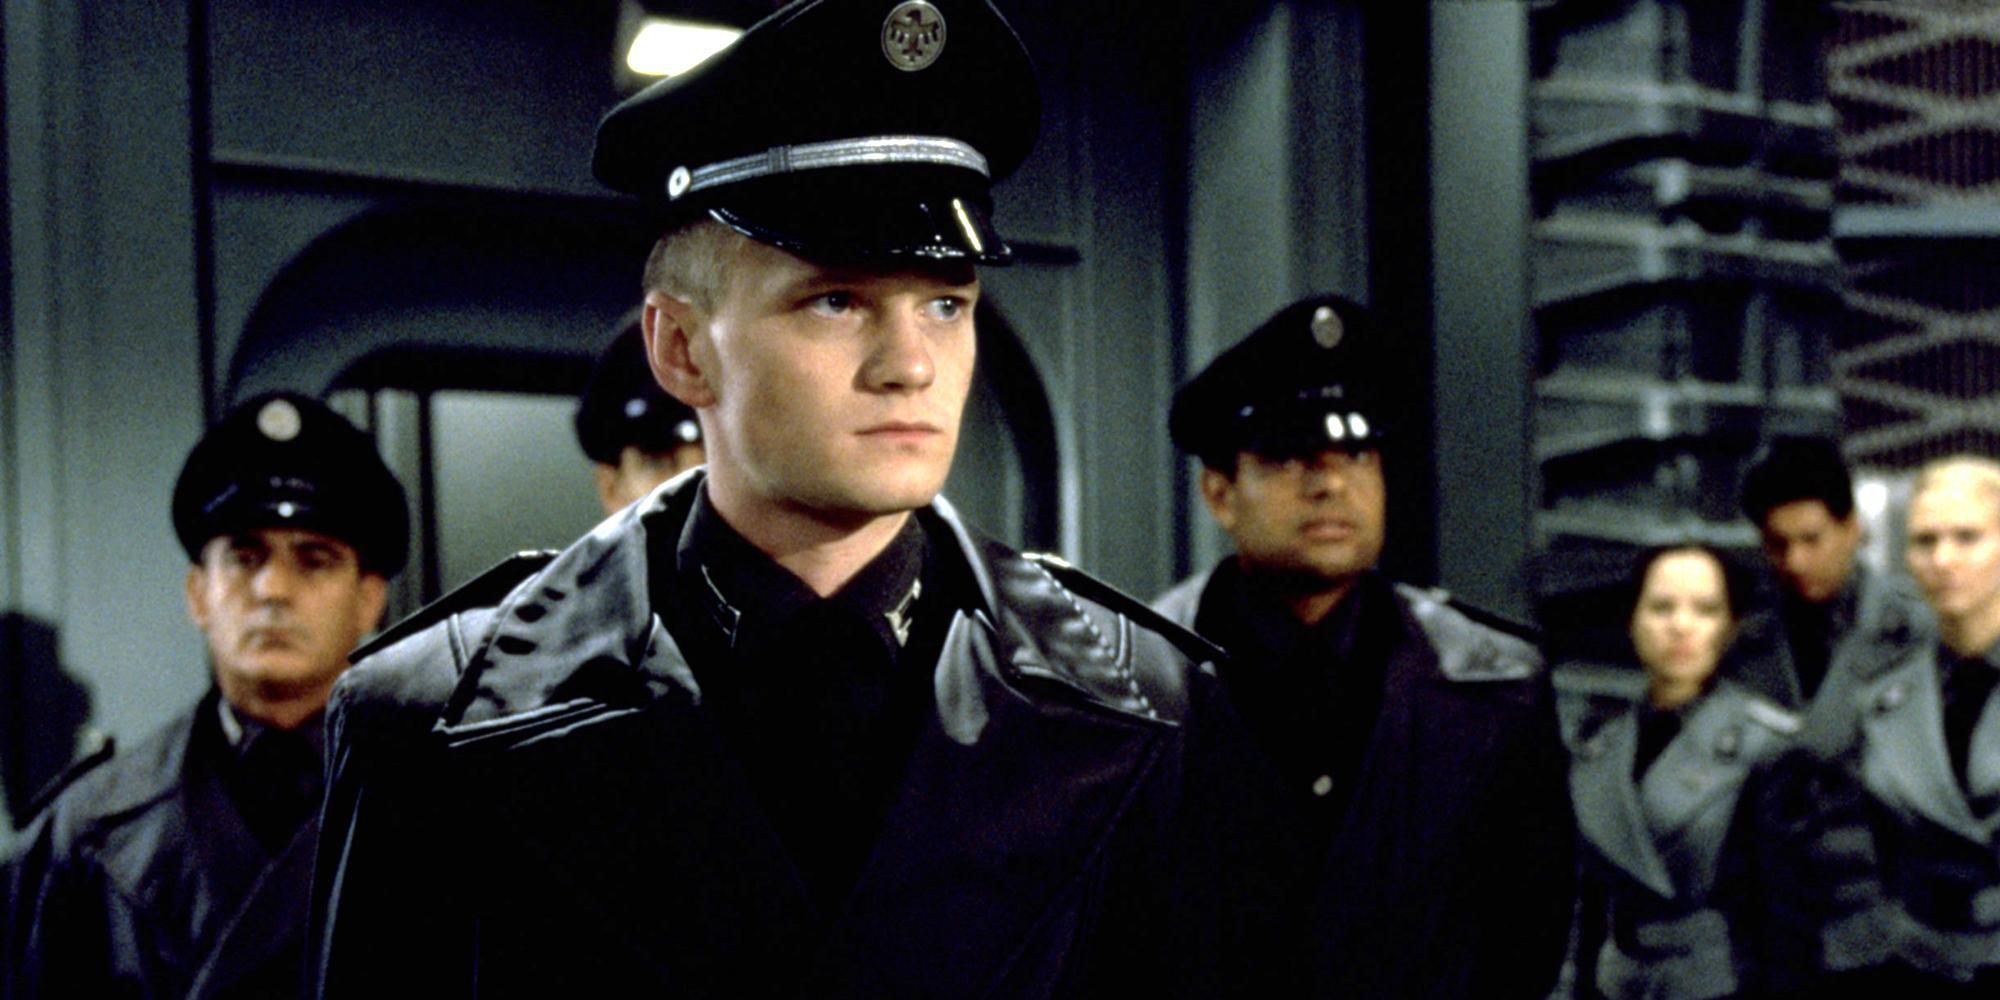 Neil Patrick Harris in a black uniform in Starship Troopers